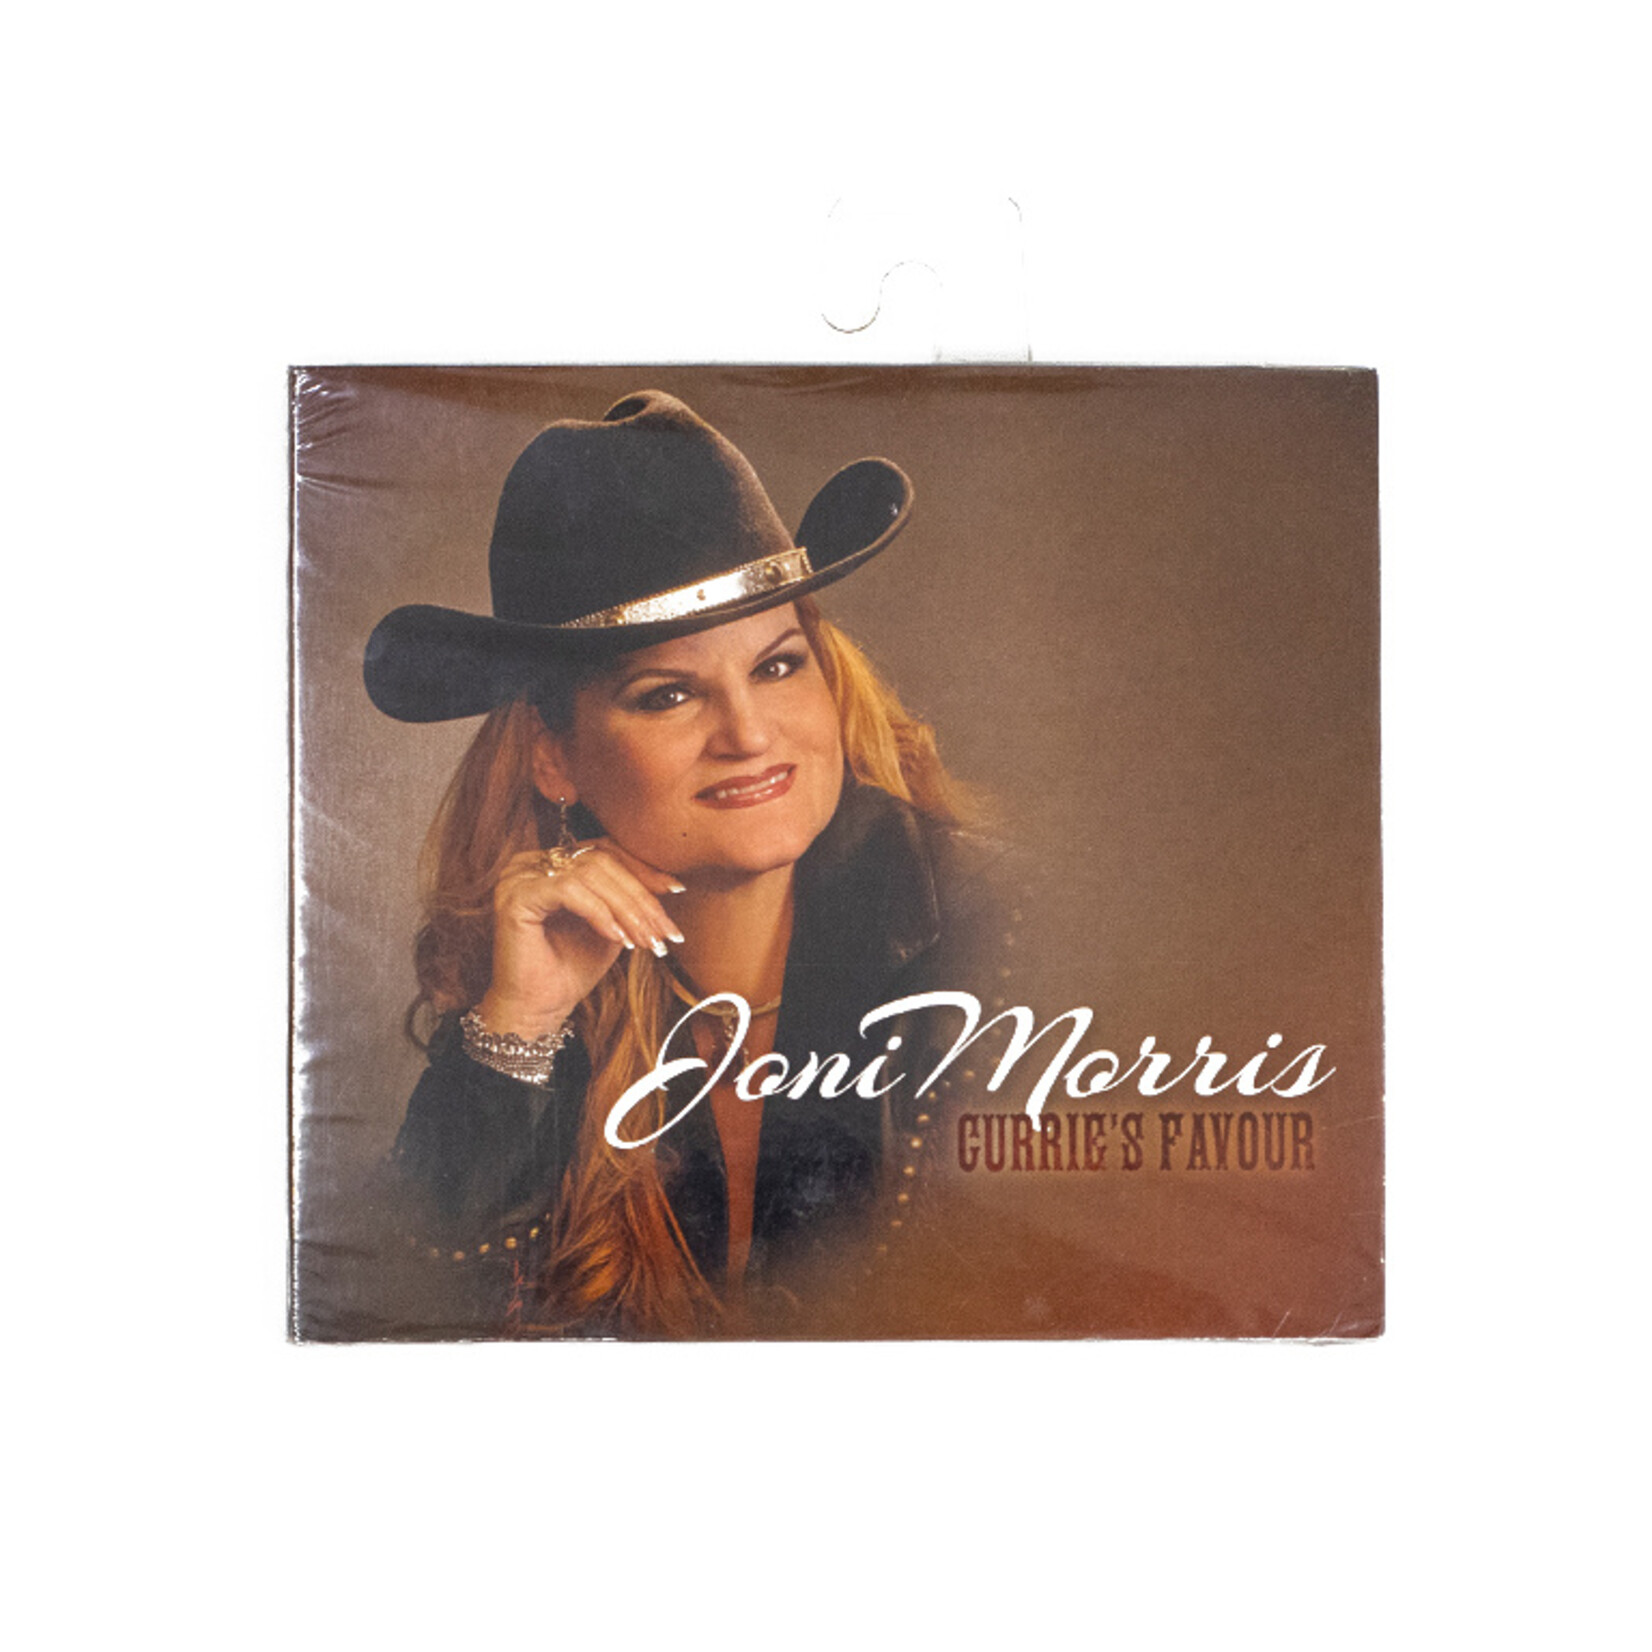 *JOM Joni Morris "Currie's Favour" CD